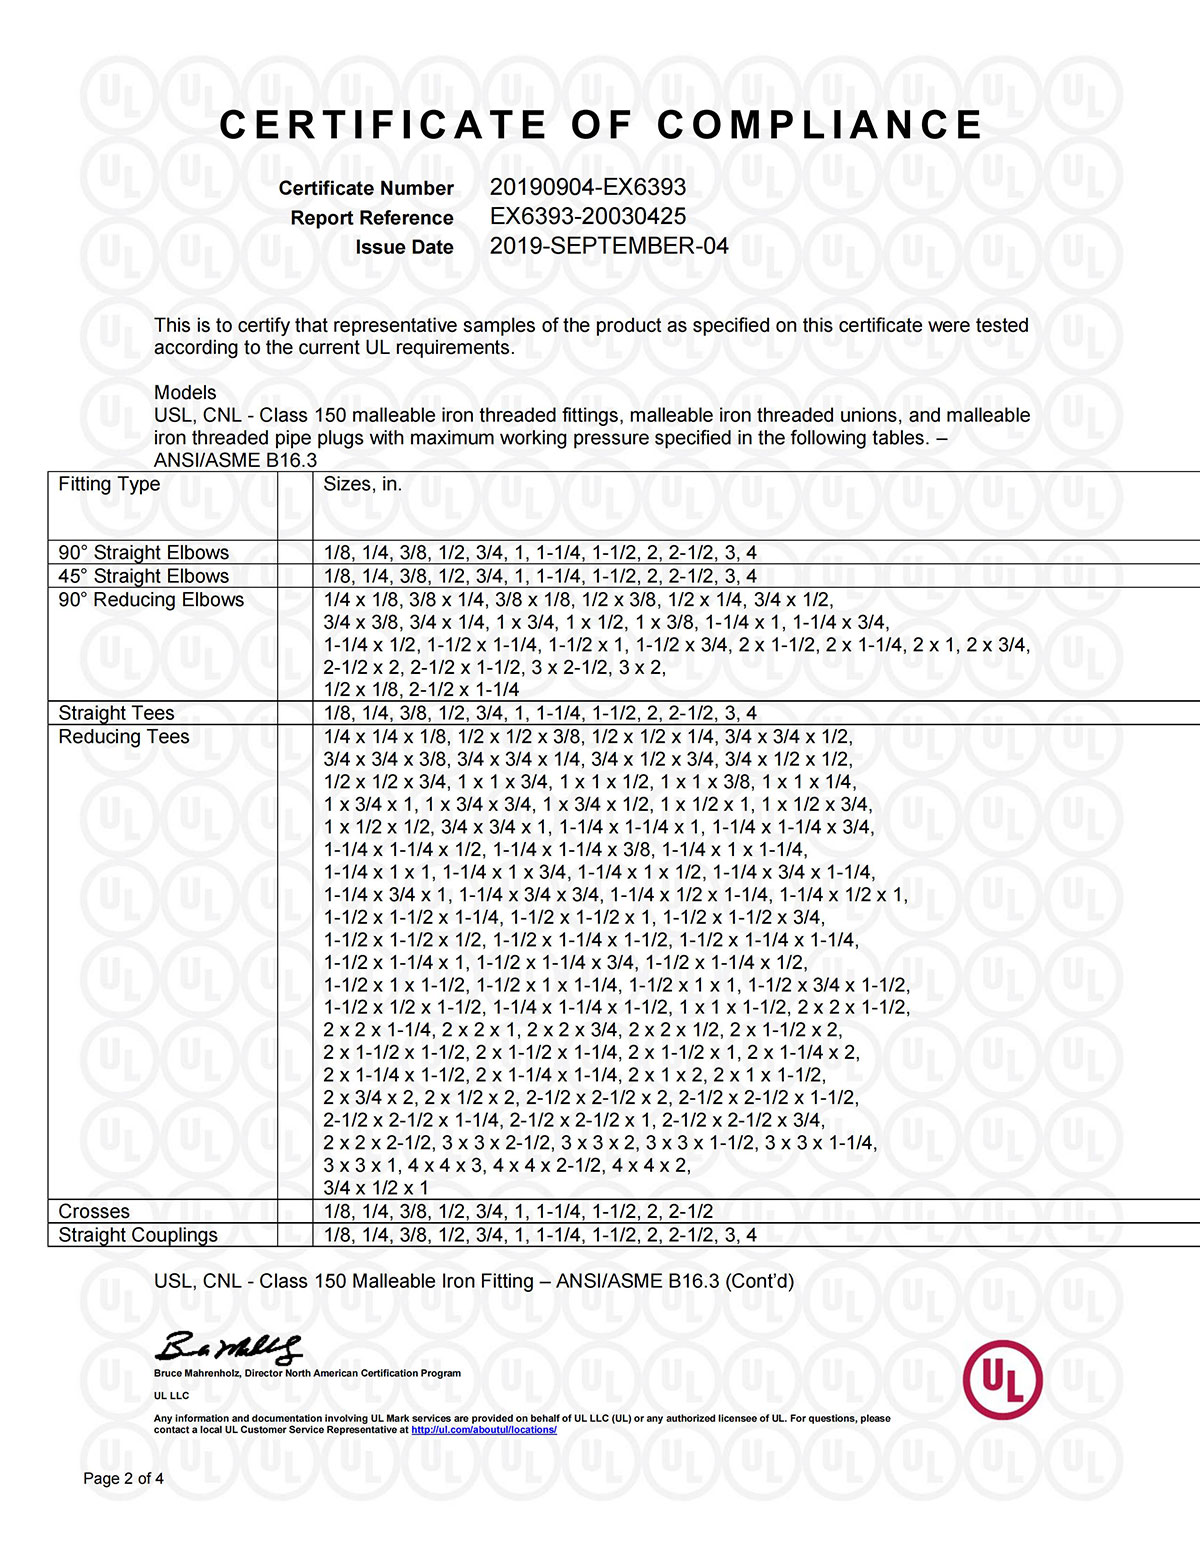 UL sertifikatas3-1